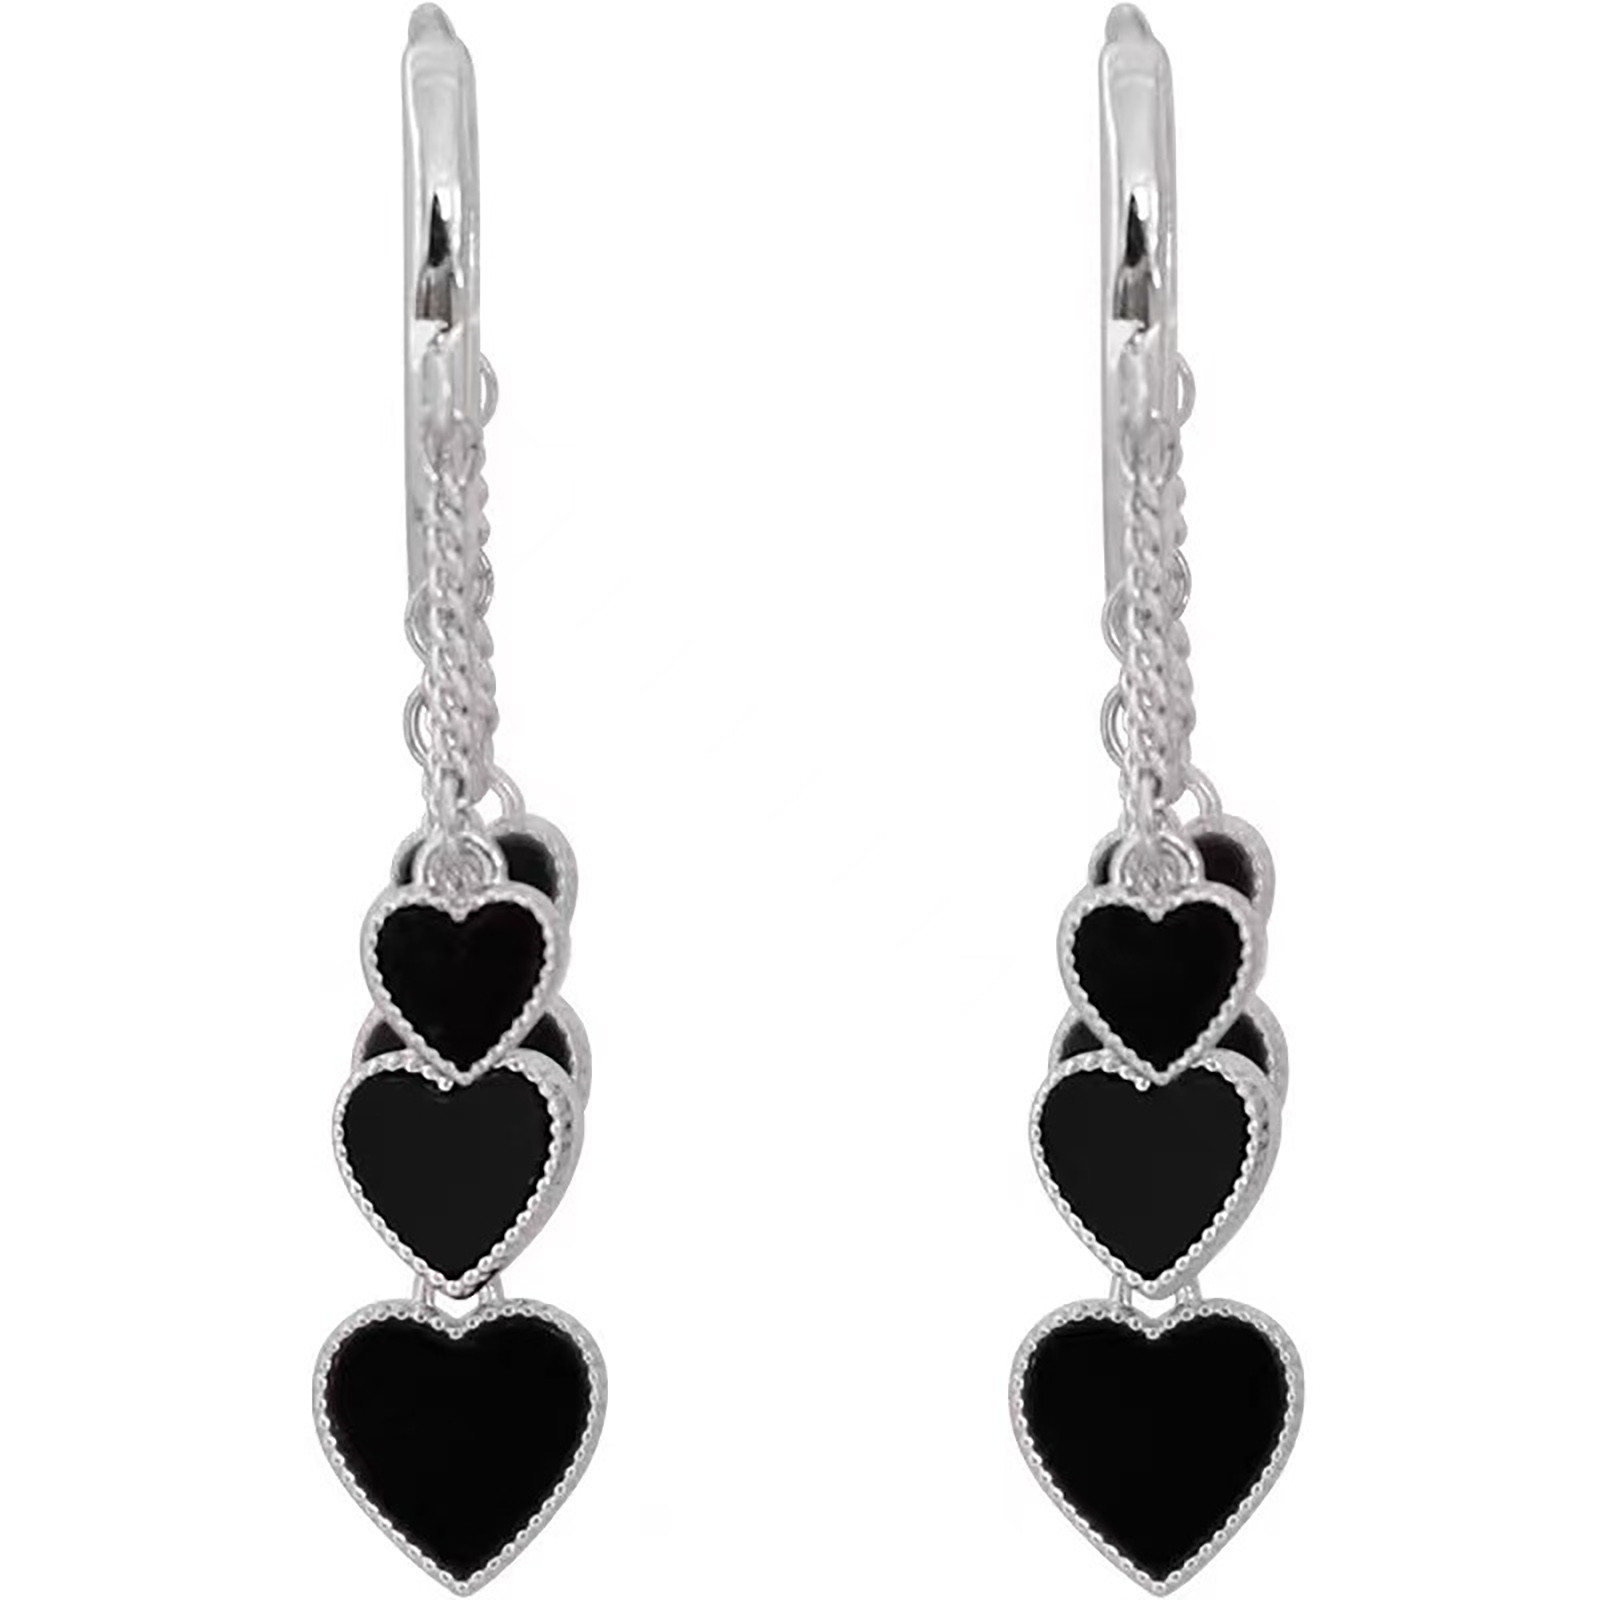 Apmemiss Wholesale Black Long Tassel Earrings,Long Love Shaped Tassel Earrings - image 1 of 1